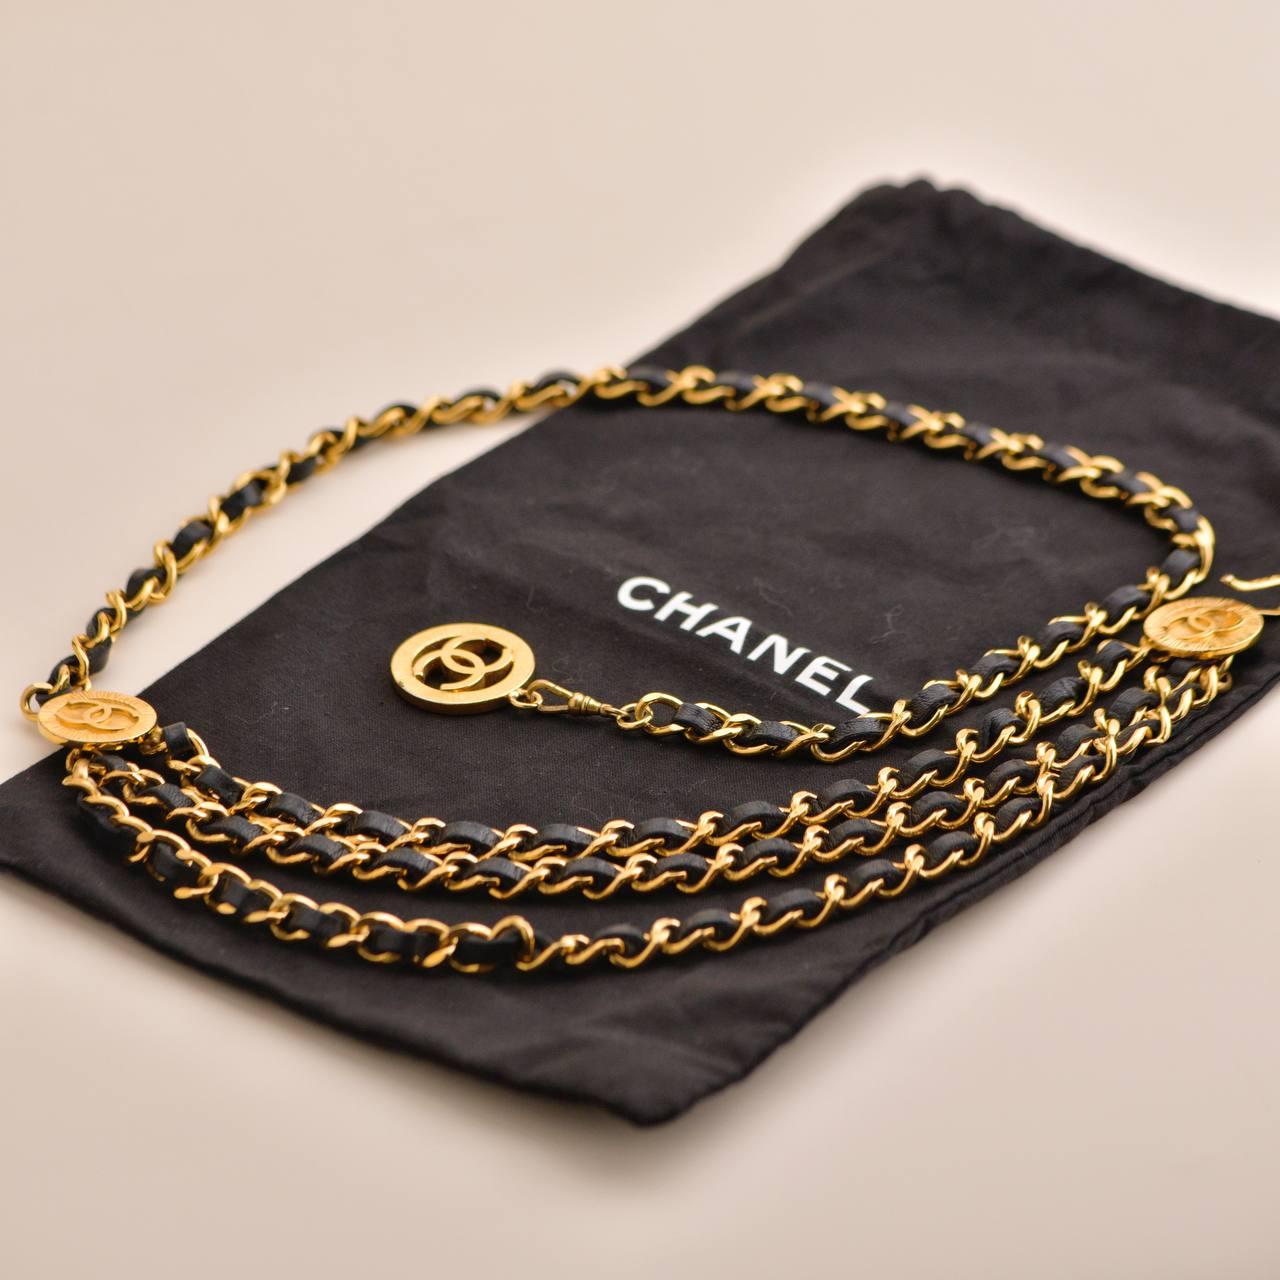 SKU. 	AT-2028
Brand	Chanel
Model	VCARP34900
Date	Chanel CC
____________________________________________________________________________
Metal	Gold-plated Brass, Calfskin
Length	Approx 90cm
Weight    Approx 198